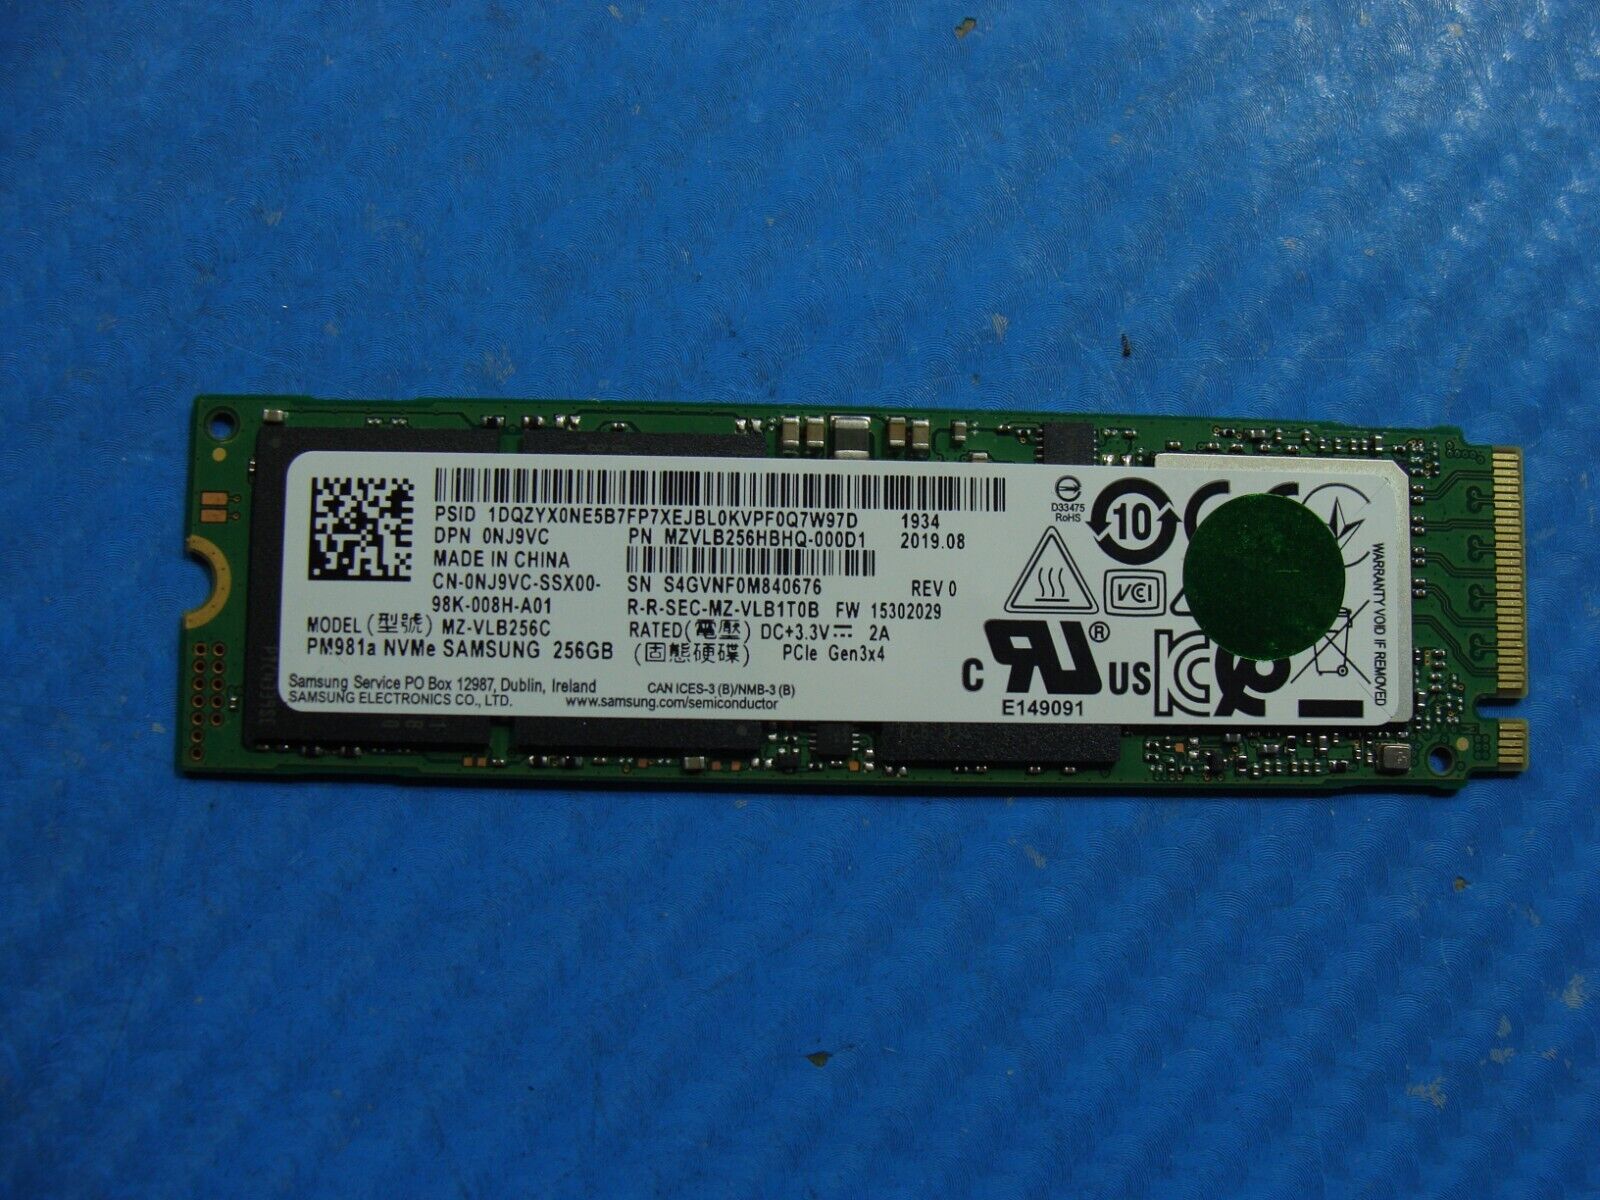 Dell 7400 Samsung 256GB NVMe M.2 SSD Solid State MZVLB256HBHQ-000D1 NJ9VC